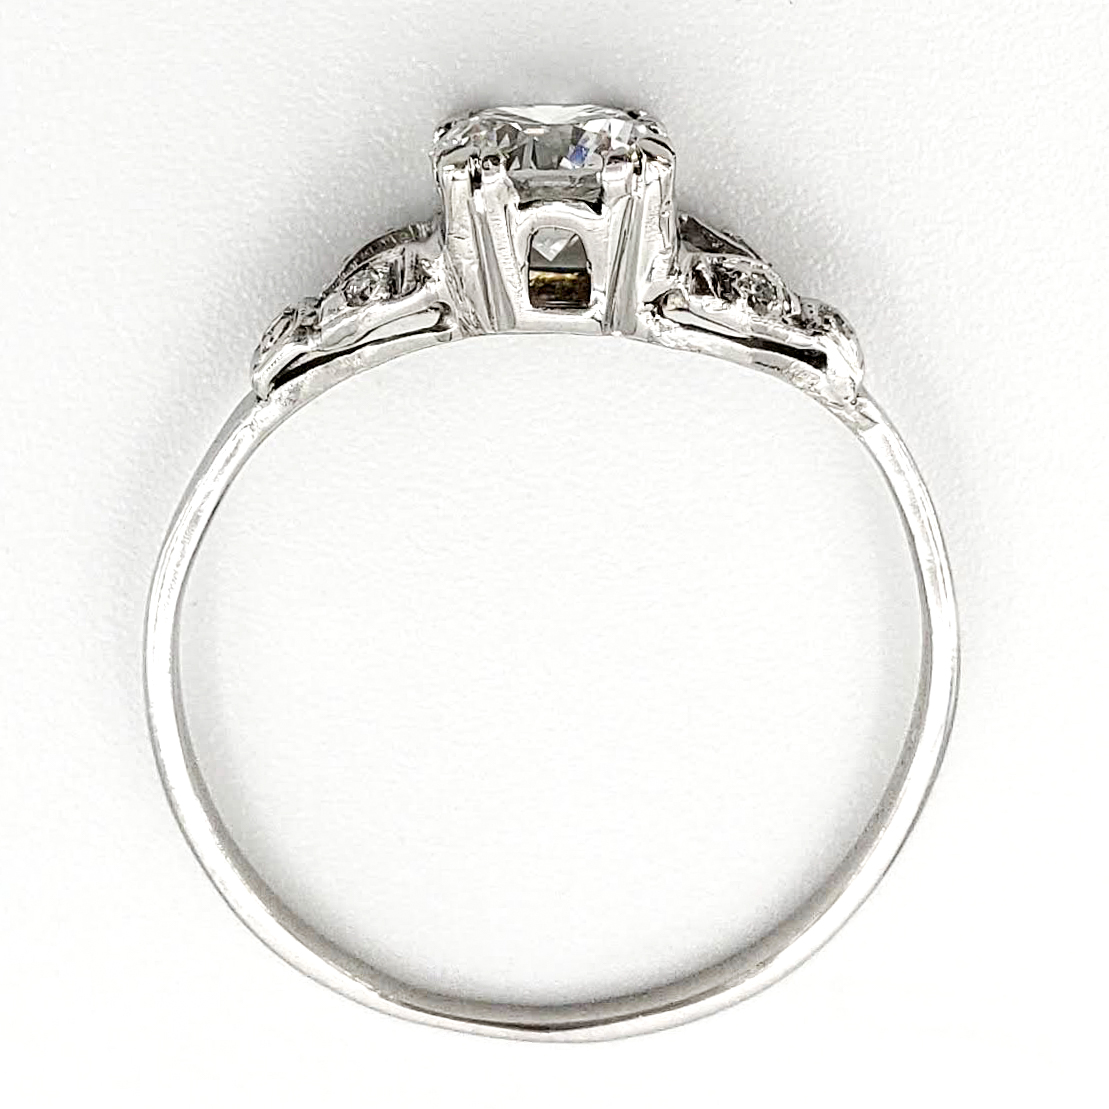 Vintage Platinum Engagement Ring With 0.60 Carat Round Brilliant Cut Diamond EGL – D SI1